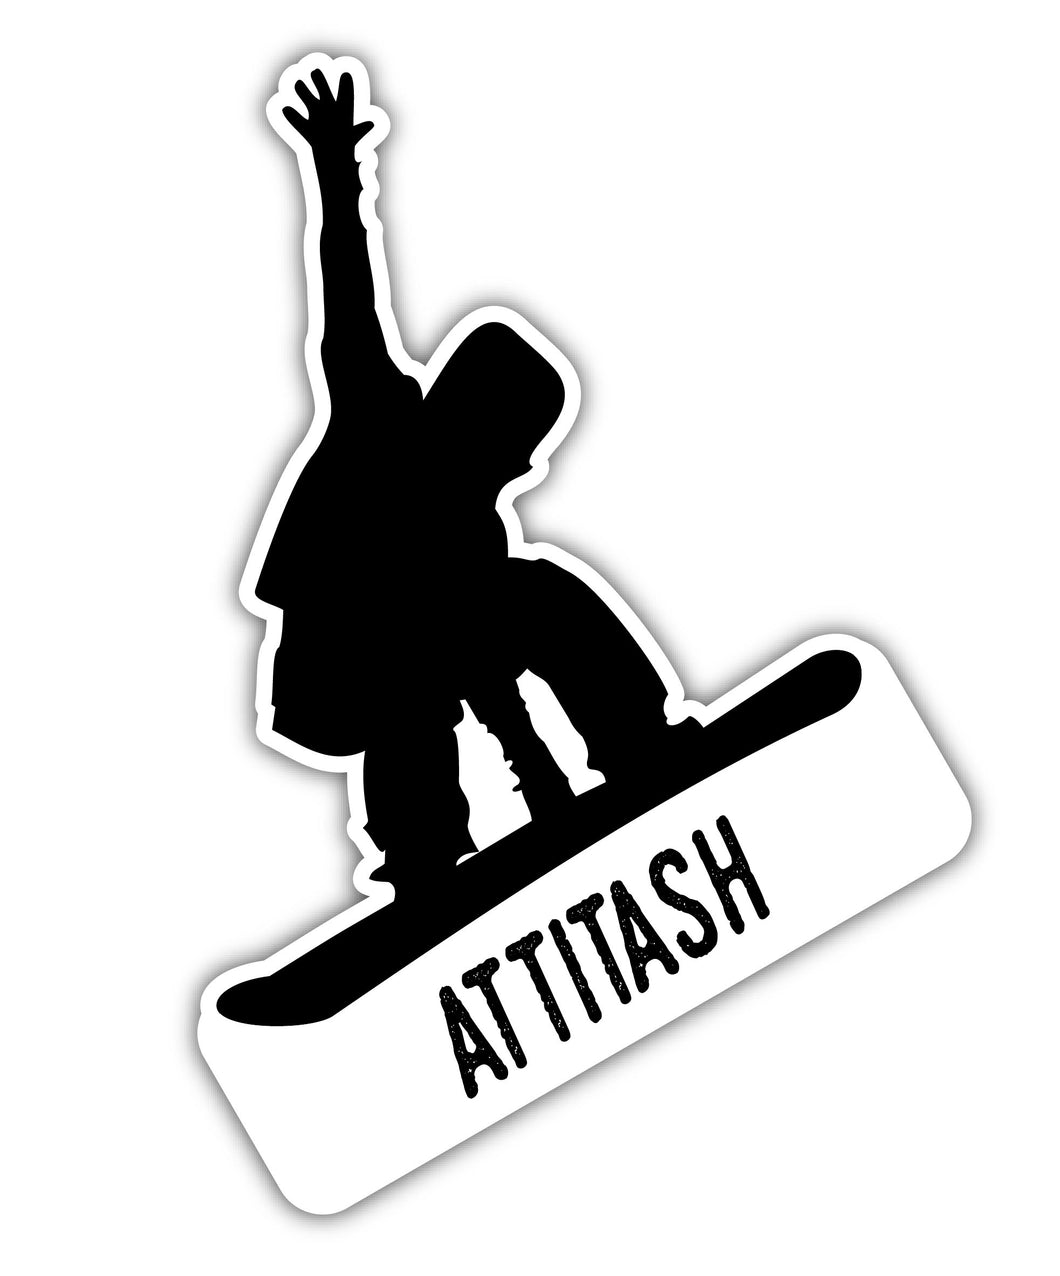 Attitash New Hampshire Ski Adventures Souvenir Approximately 5 x 2.5-Inch Vinyl Decal Sticker Goggle Design